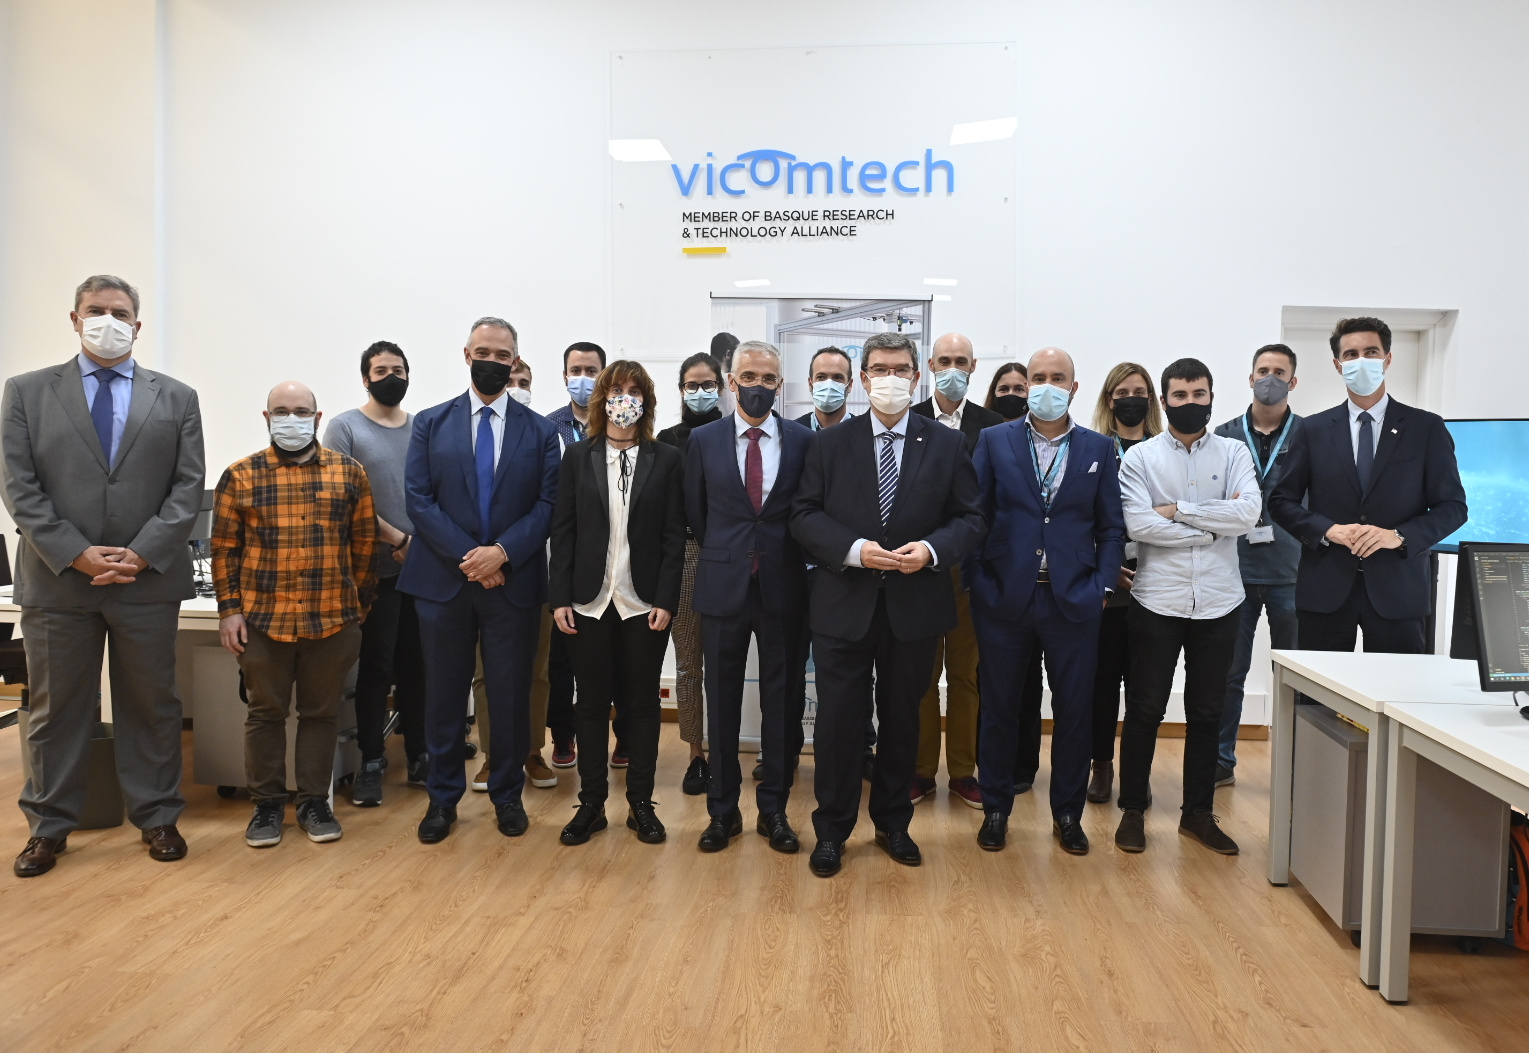 Vicomtech opens a new headquarters in Bilbao